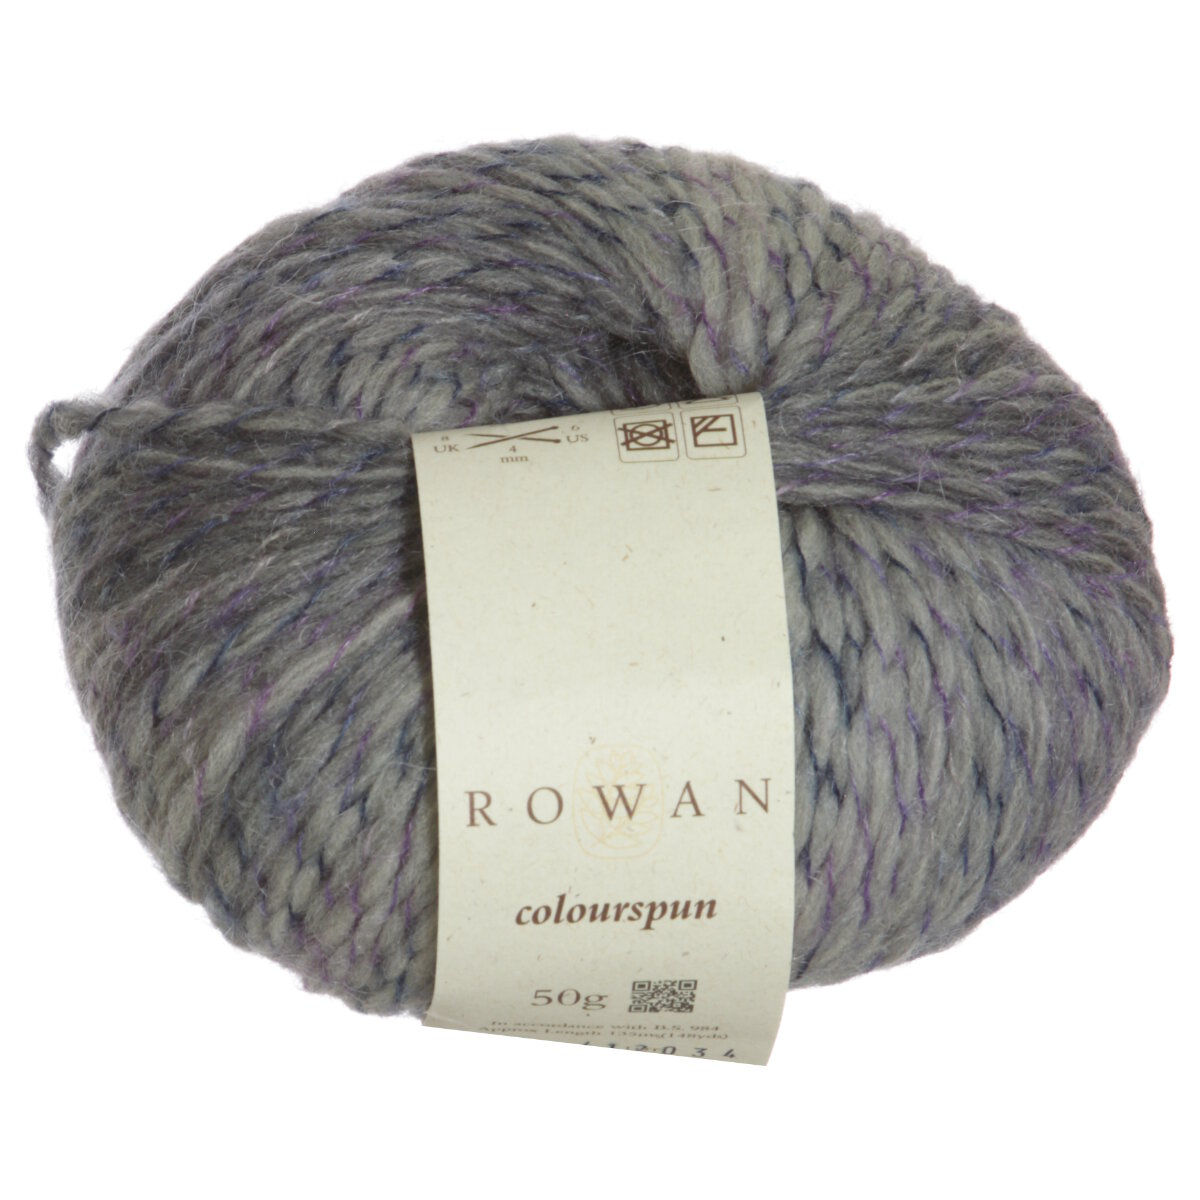 Rowan Colourspun Yarn at Jimmy Beans Wool